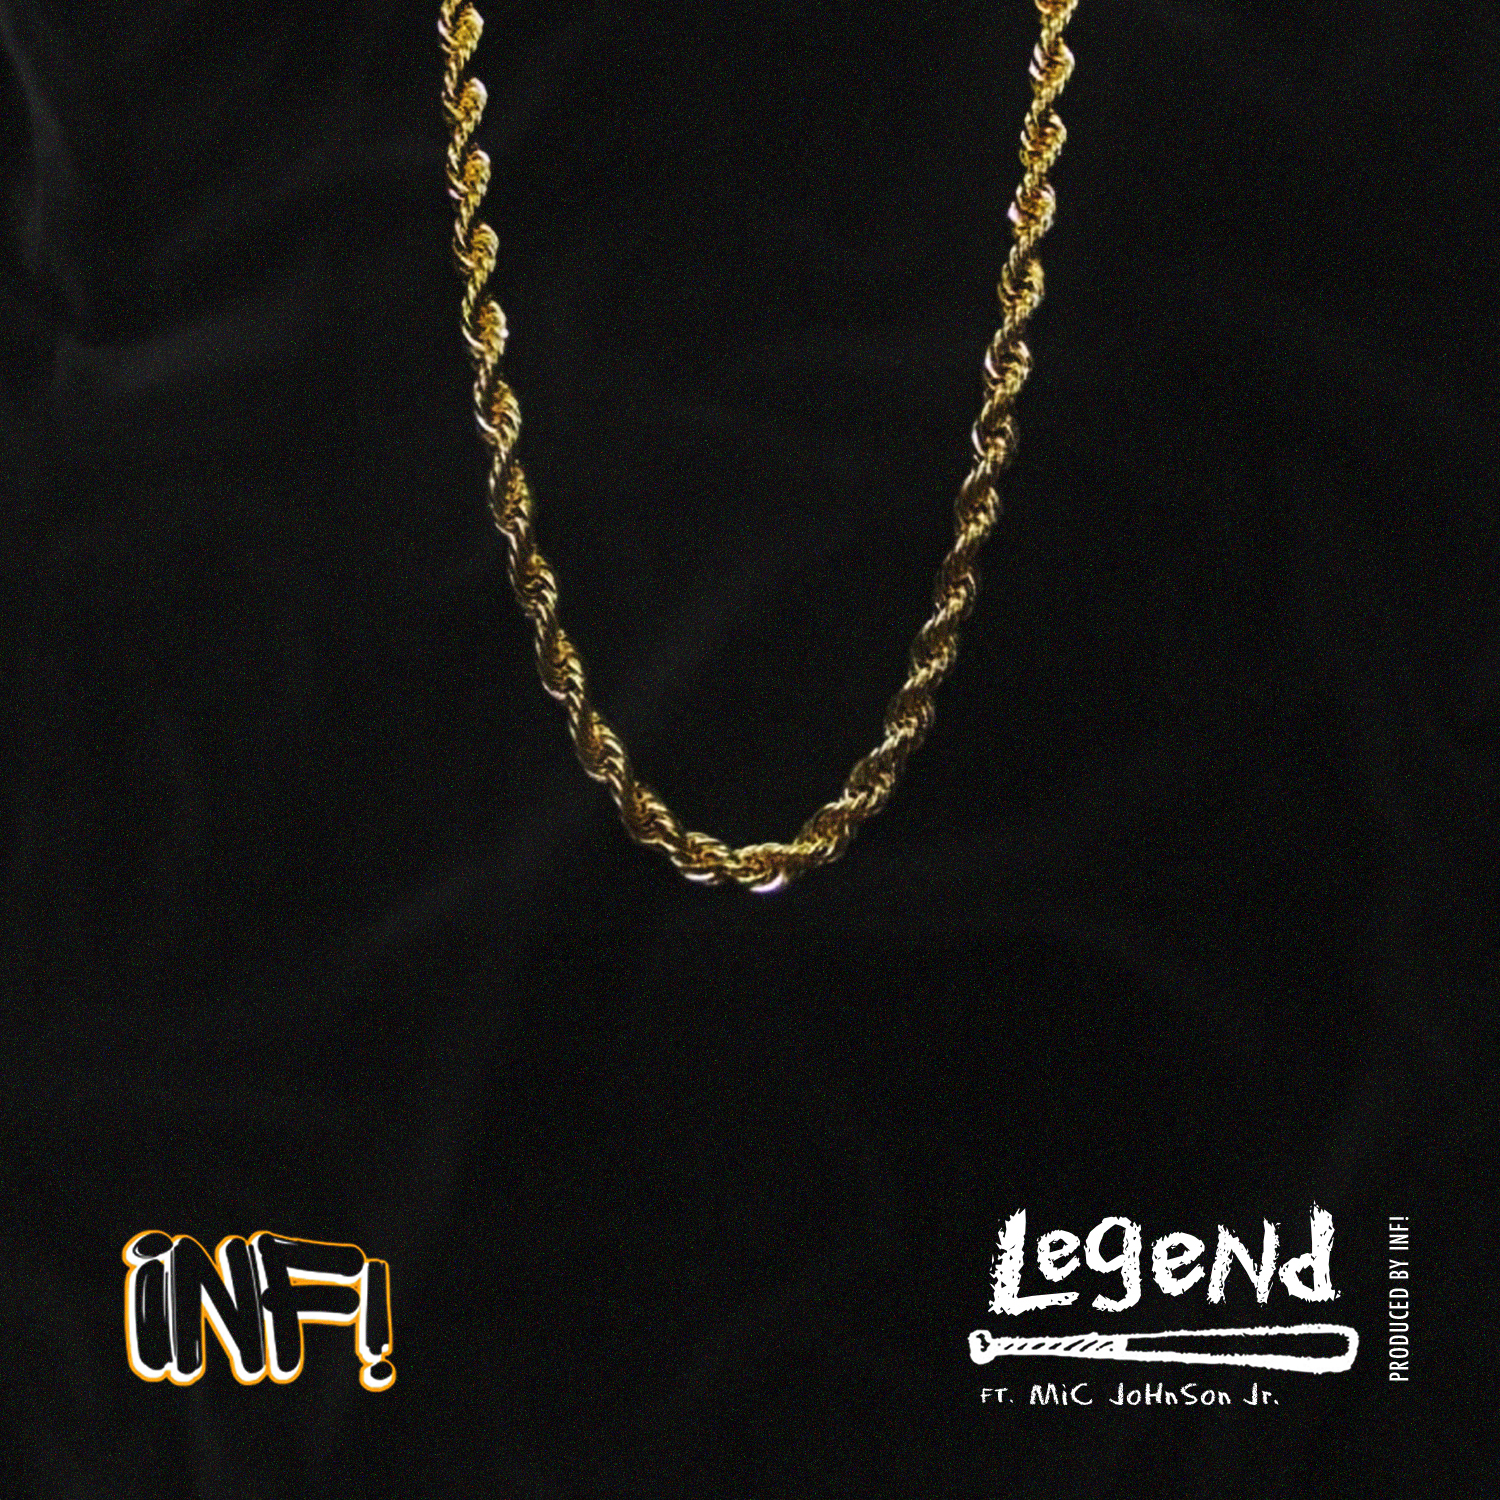 (Audio) INF!- Legend (Feat. MIC Johnson Jr.) @infcasso